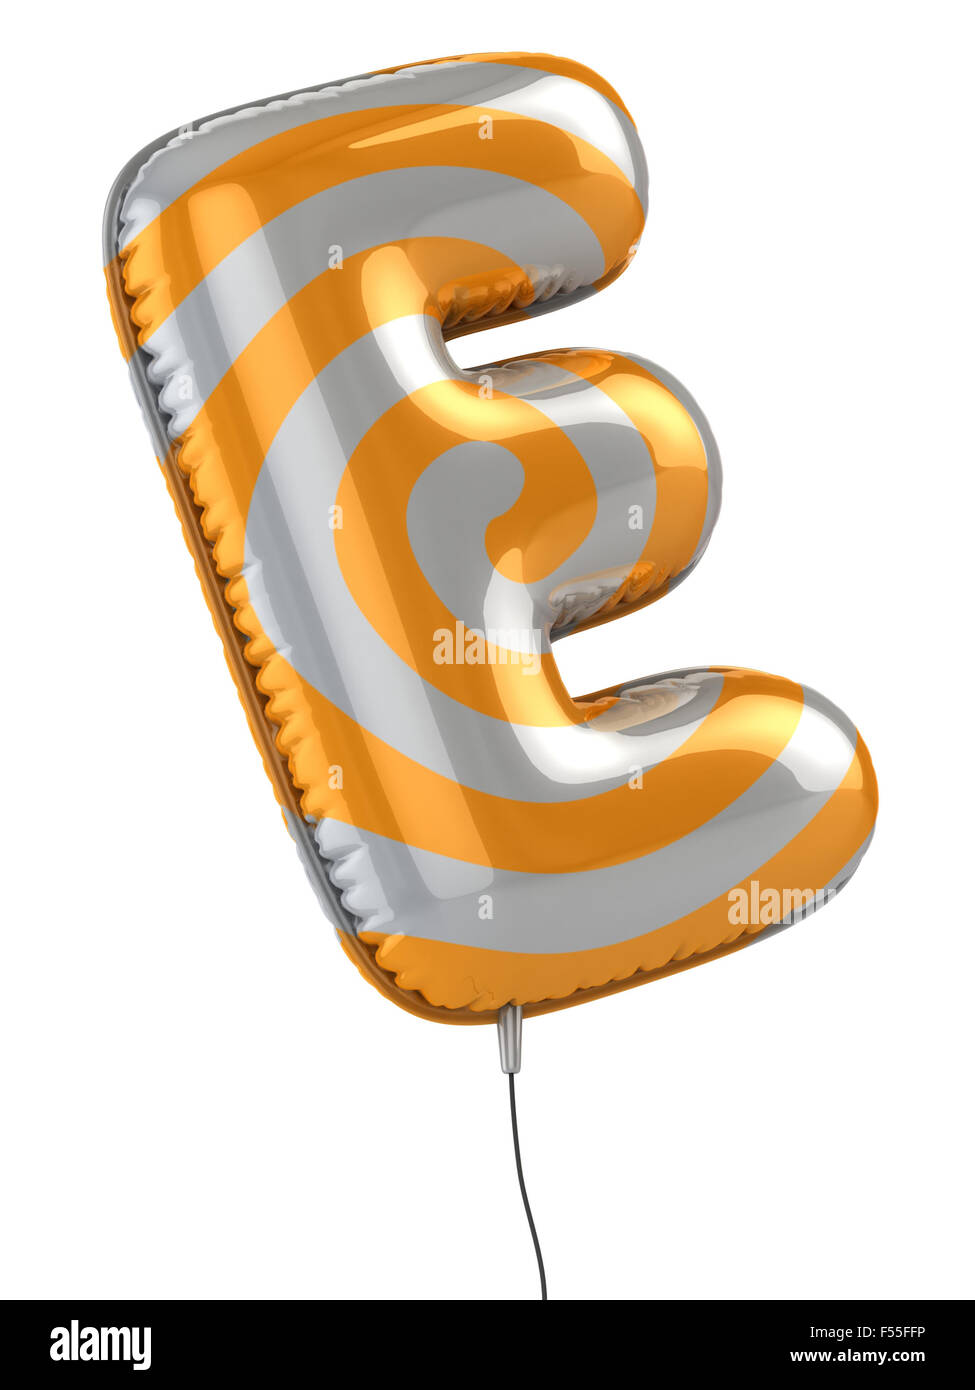 letter E balloon 3d illustration Stock Photo